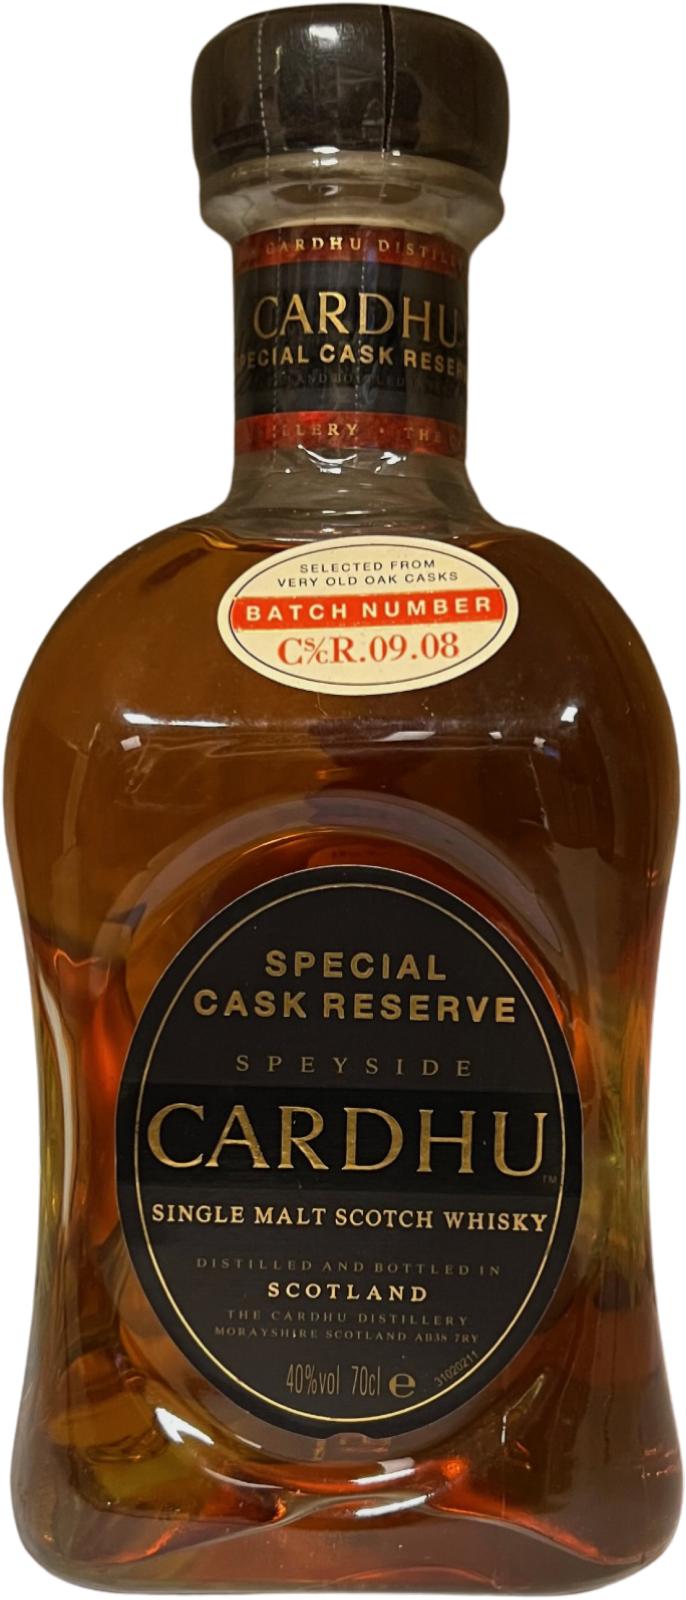 Cardhu Special Cask Reserve Speyside Oak Batch Cs cR.09.08 40% 700ml